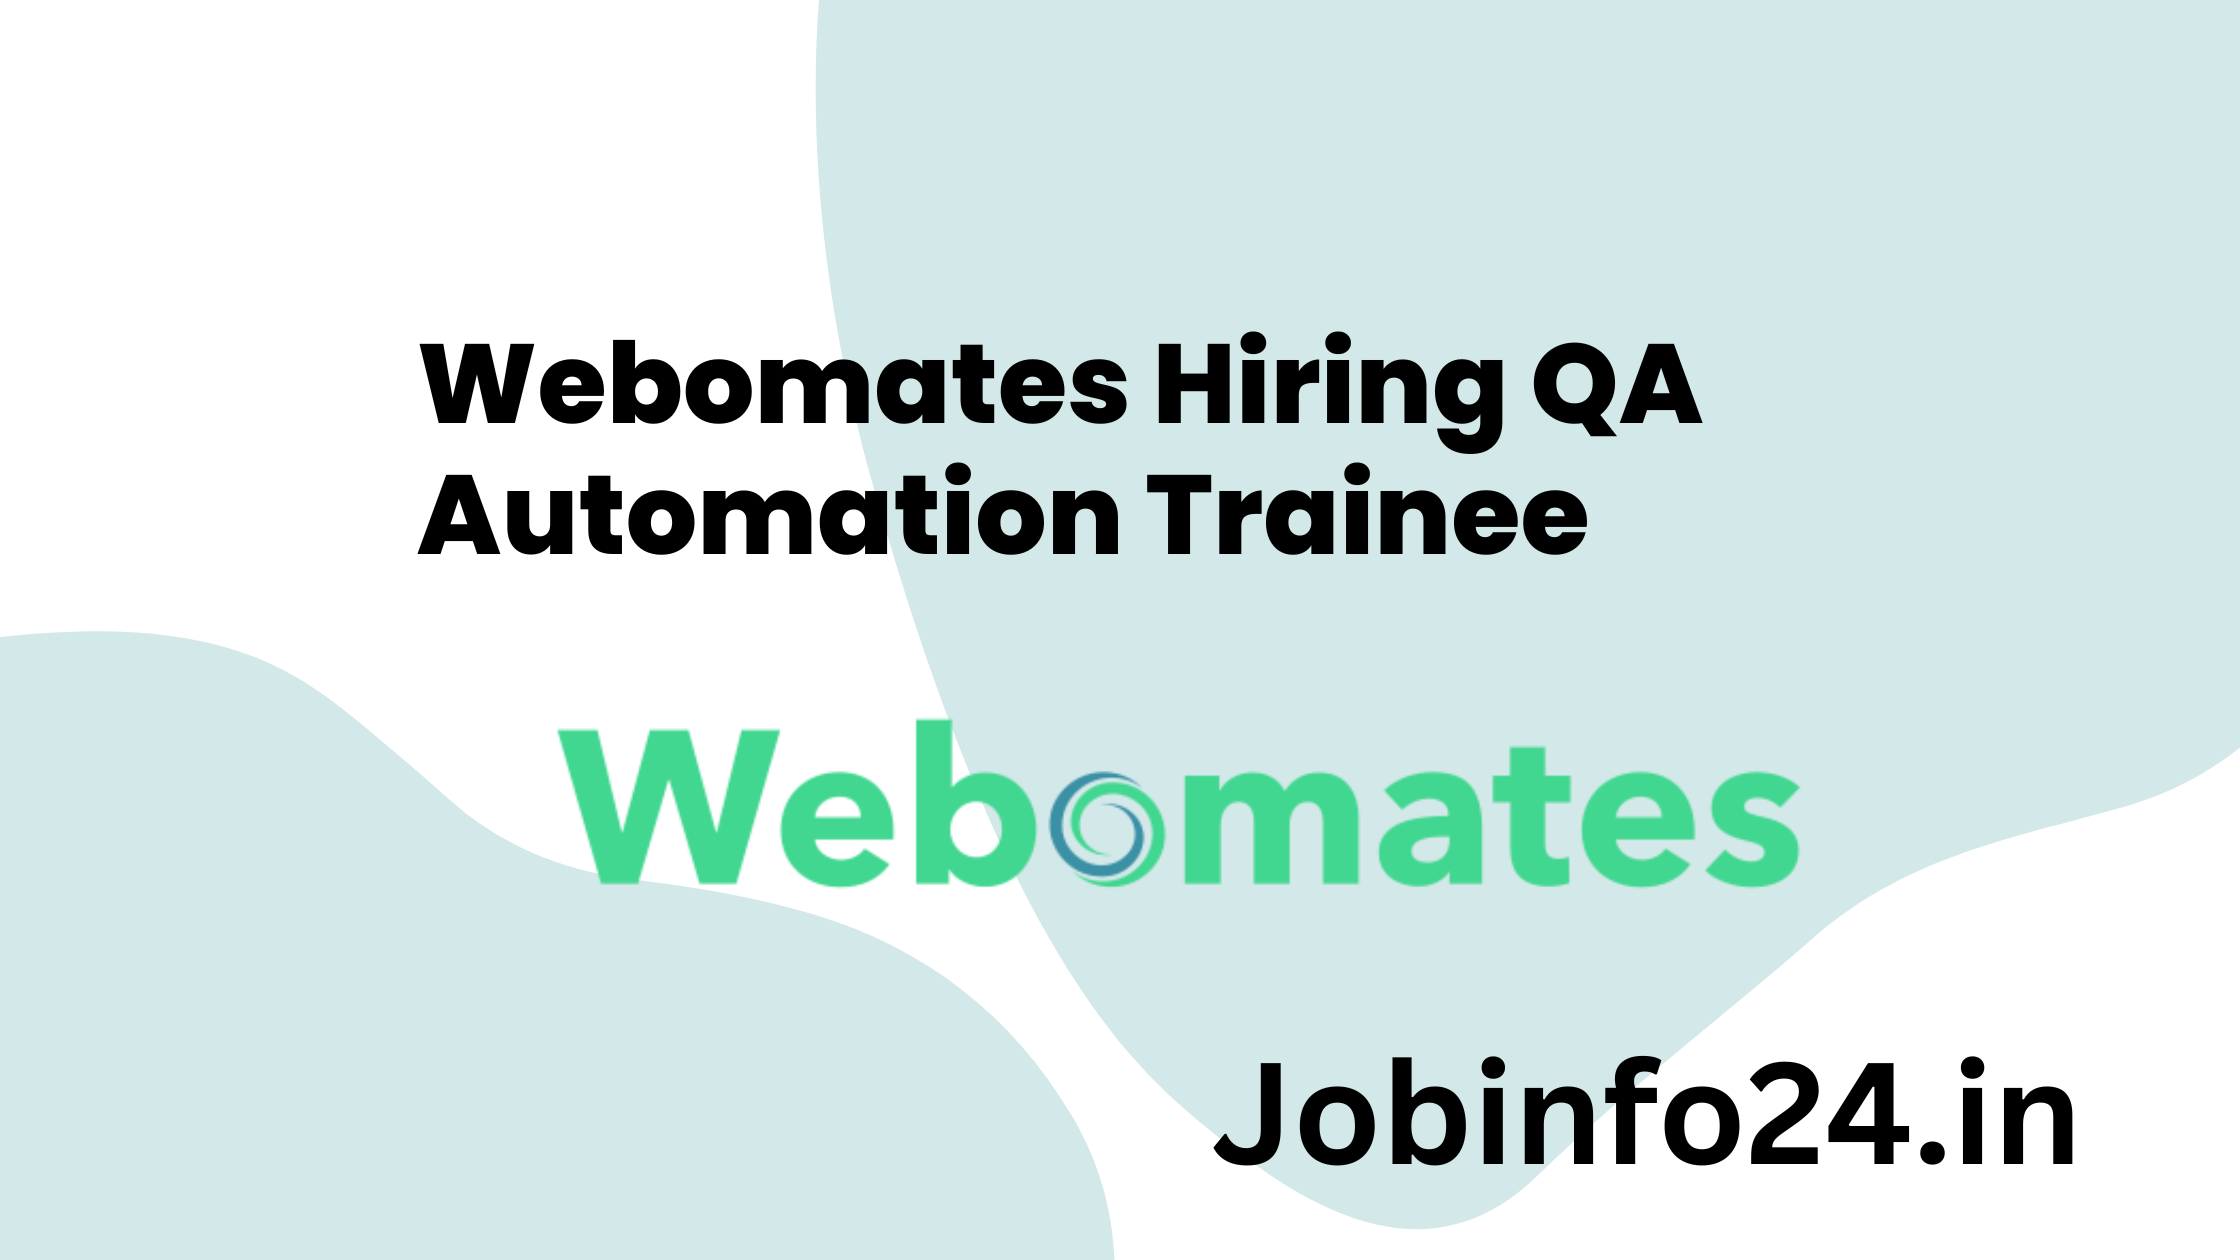 Webomates Hiring QA Automation Trainee